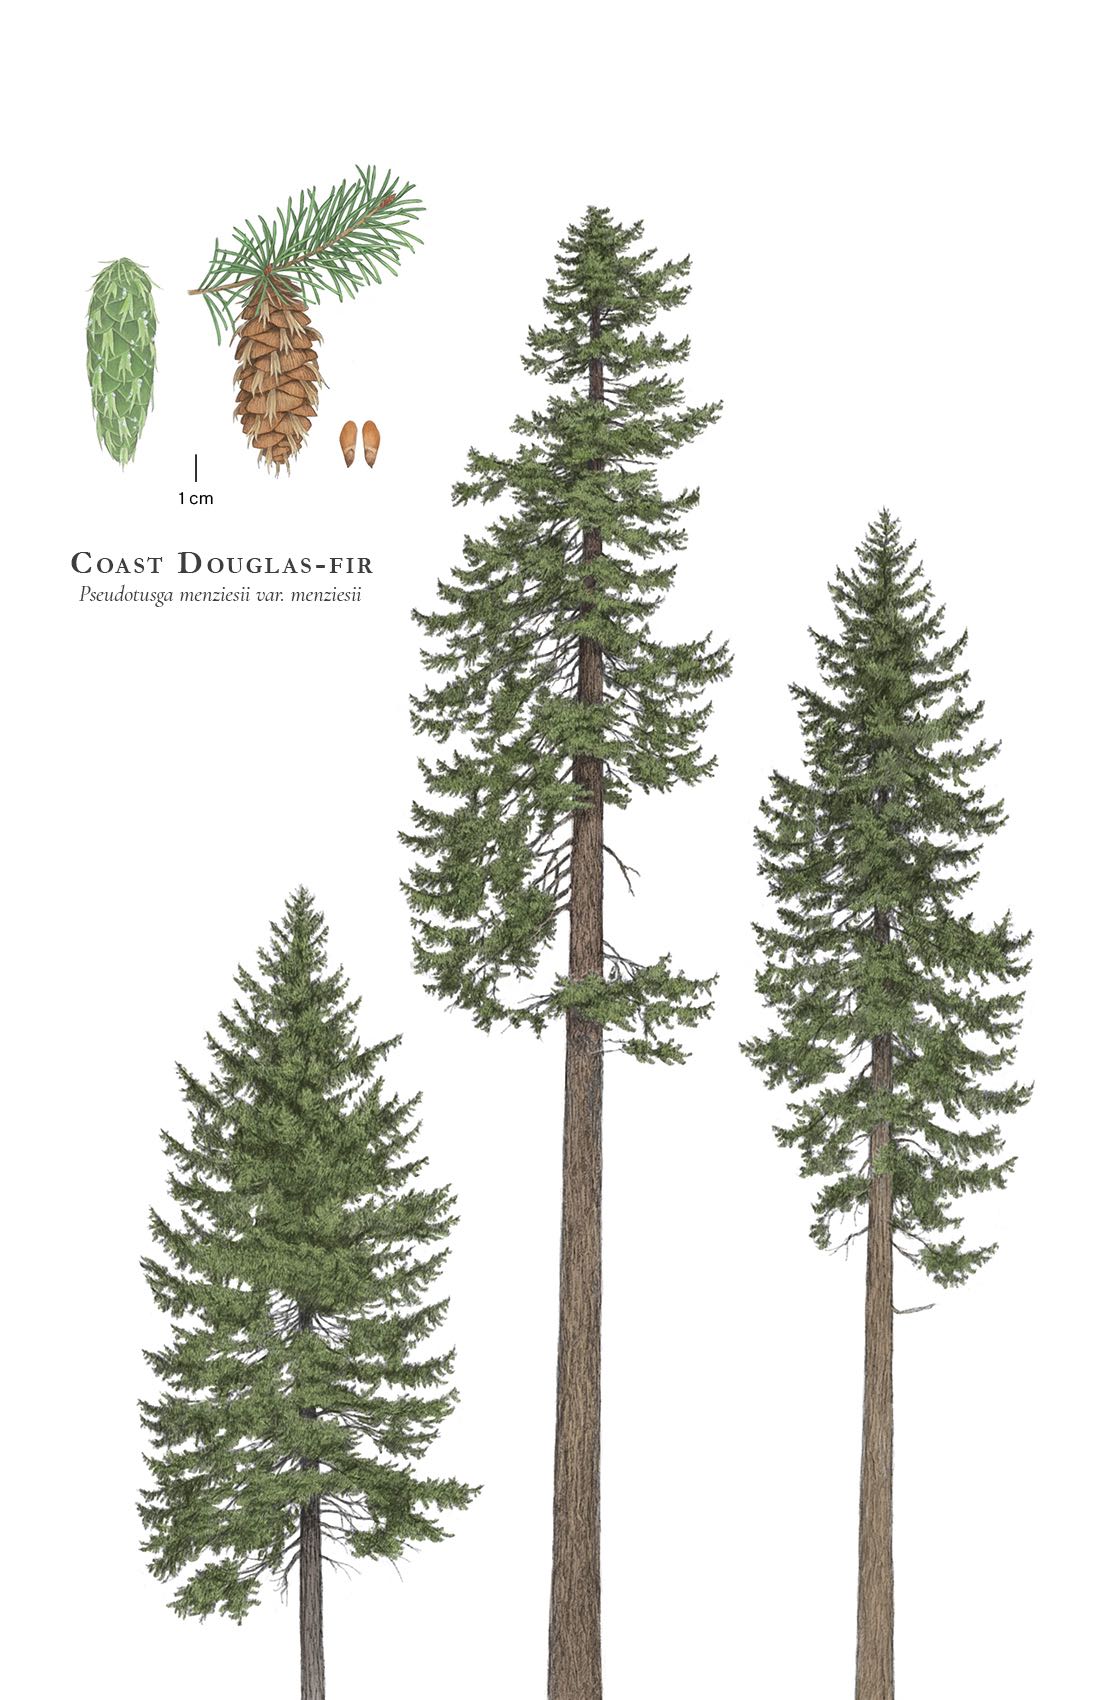 Pseudotsuga menziesii menziesii (coast Douglas-fir) description